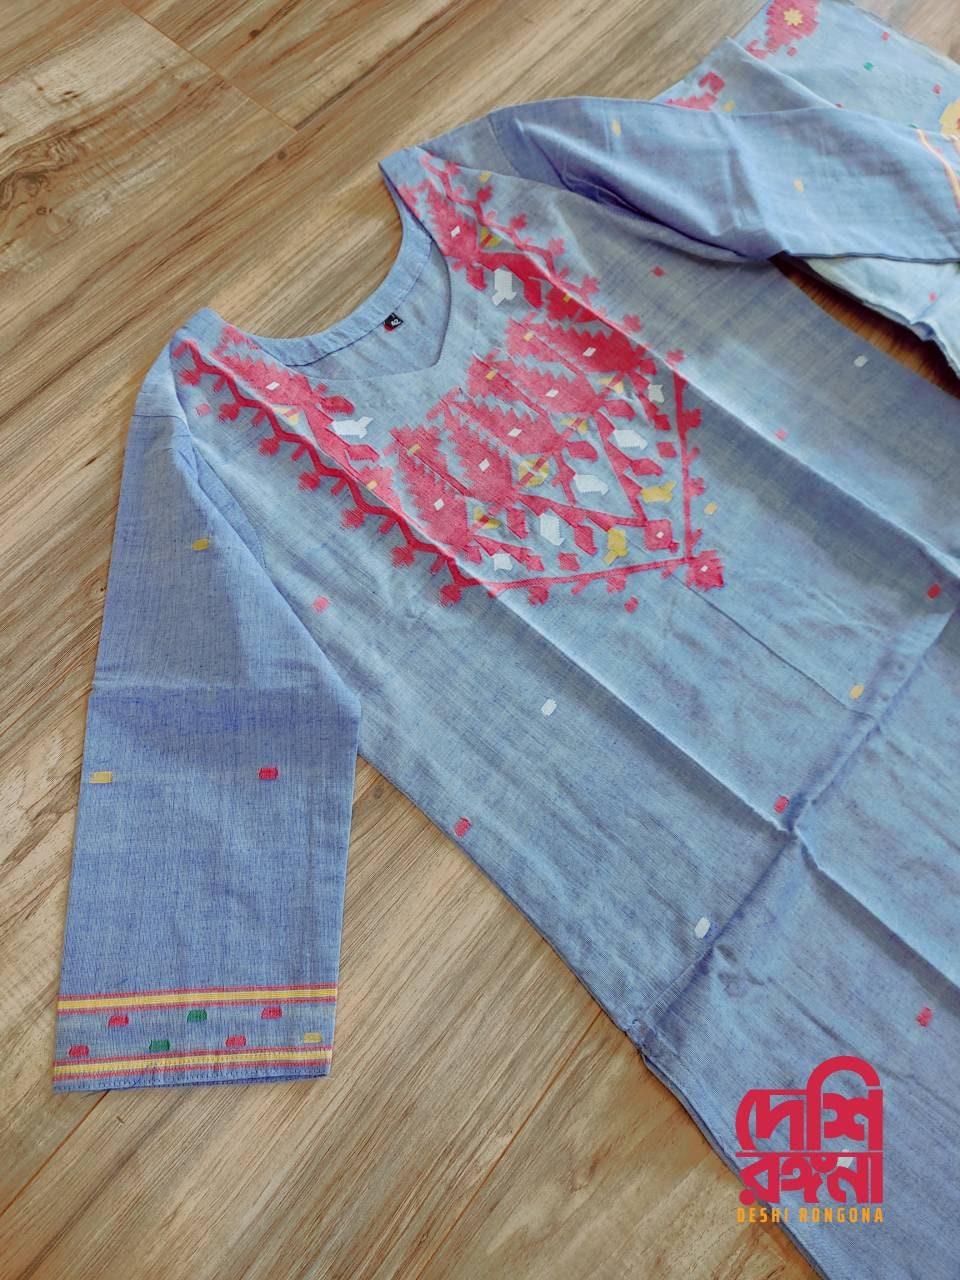 Dhakai Jamdani Dress, I'llHandloom Cotton 2 piece, Grayish blue and Red Combination, Soft, Comfortable Summer Wear. Kamij and Dupatta